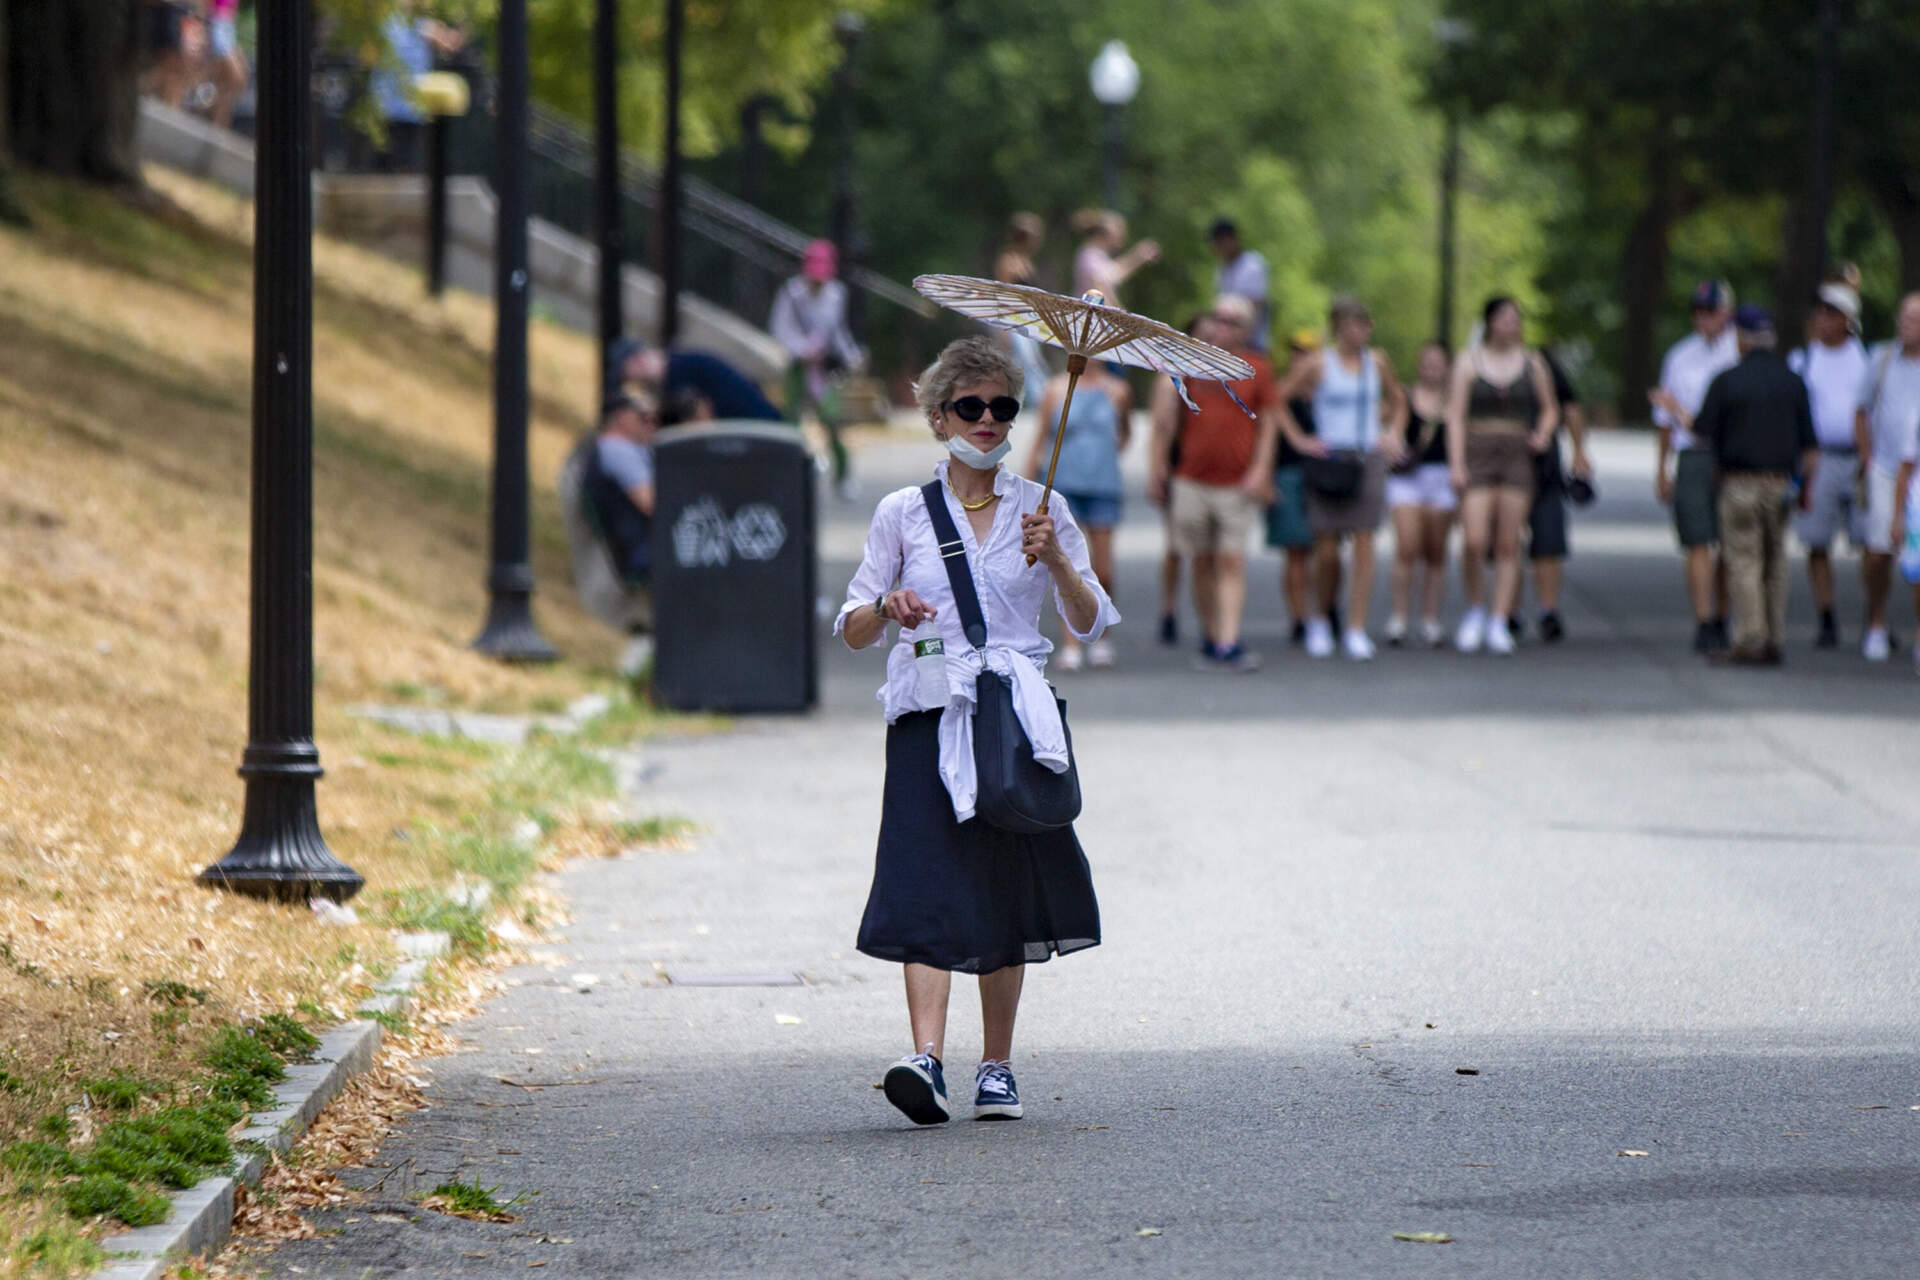 A woman walks with an umbrella shielding herself from the sun in Boston Common. (Jesse Costa/WBUR file photo)